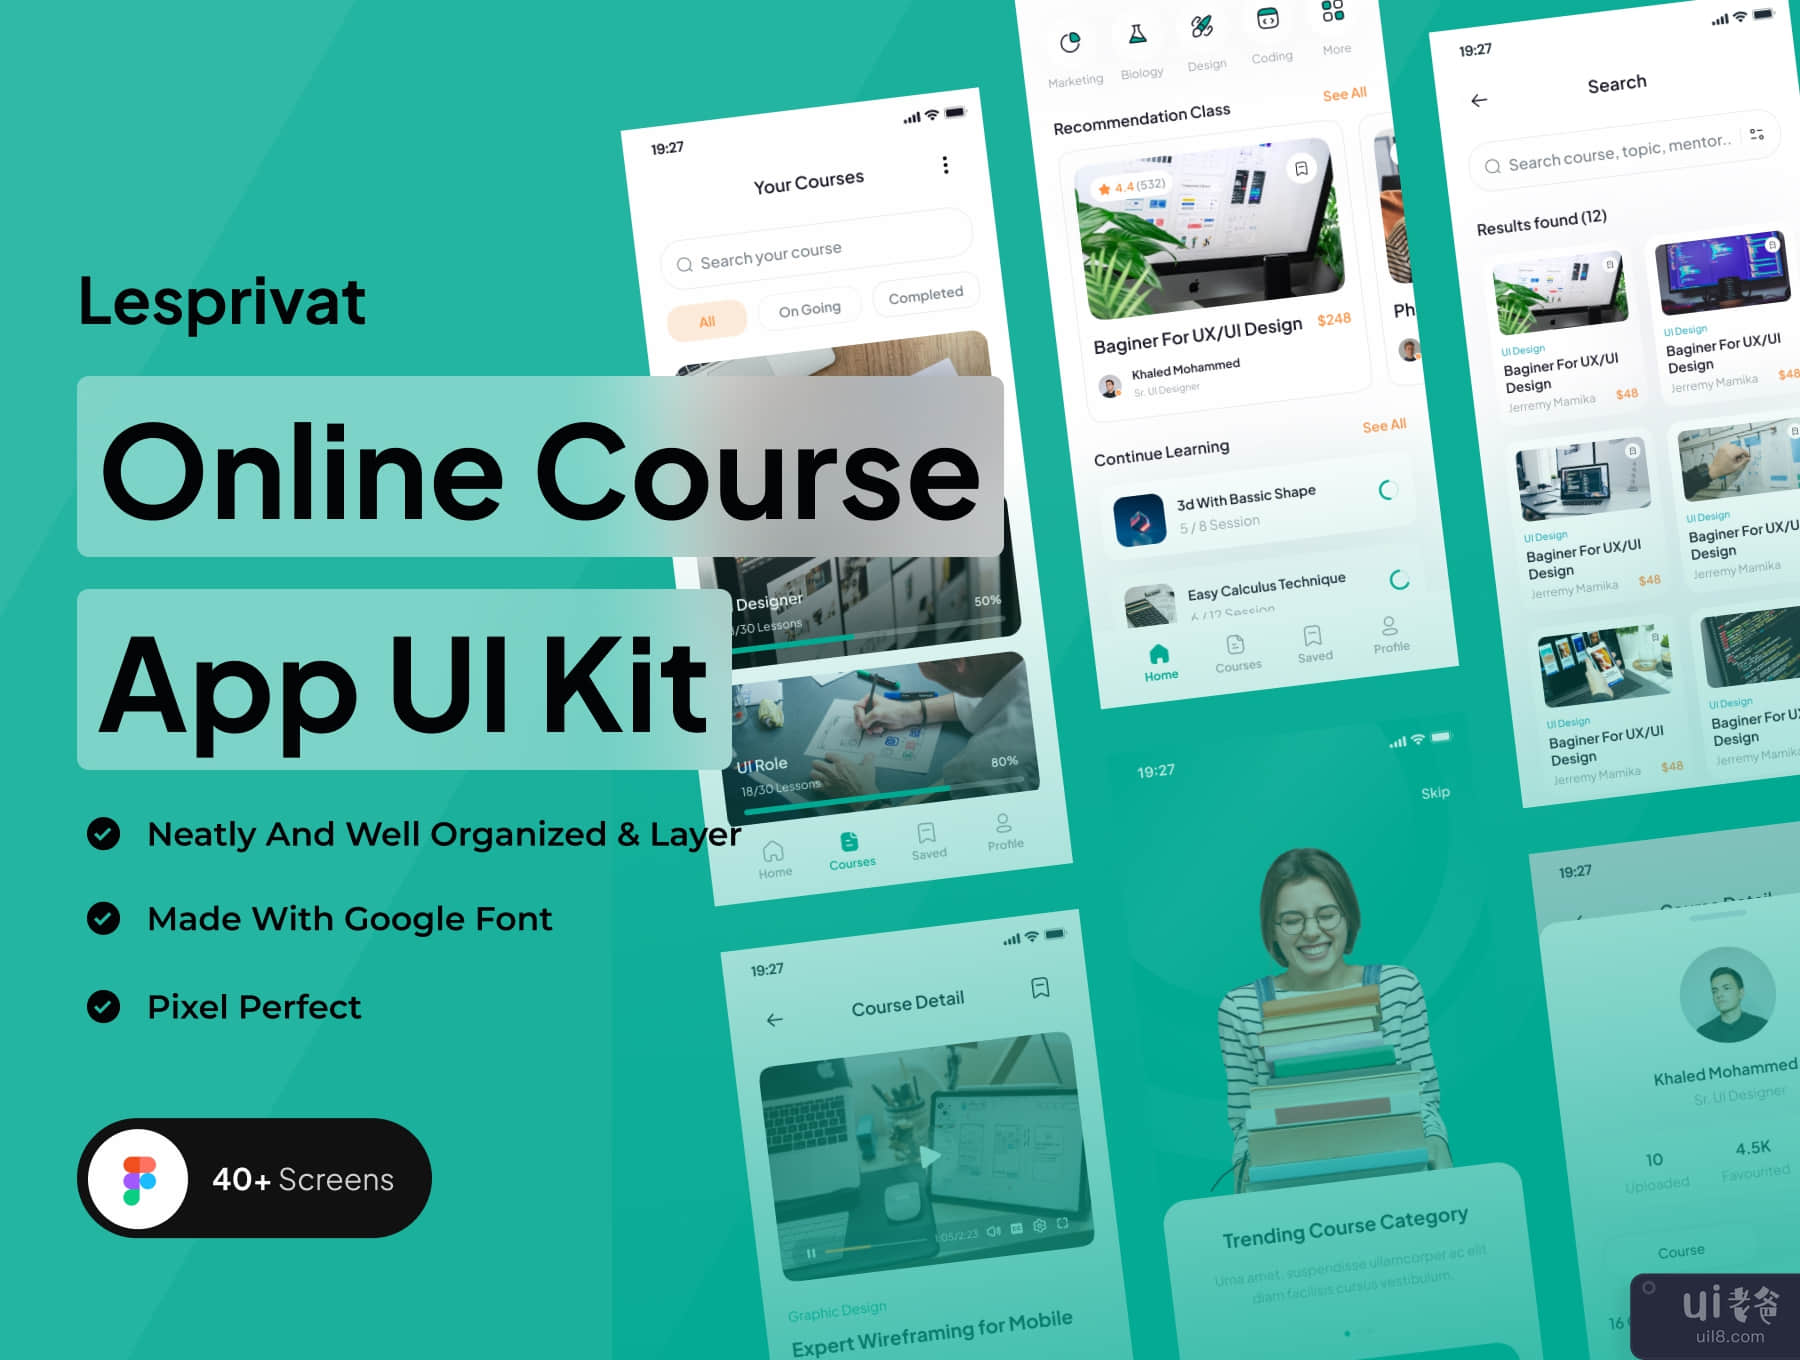 Lesprivat - 在线课程应用程序 UI 工具包 (Lesprivat - Online Course App UI Kit)插图5